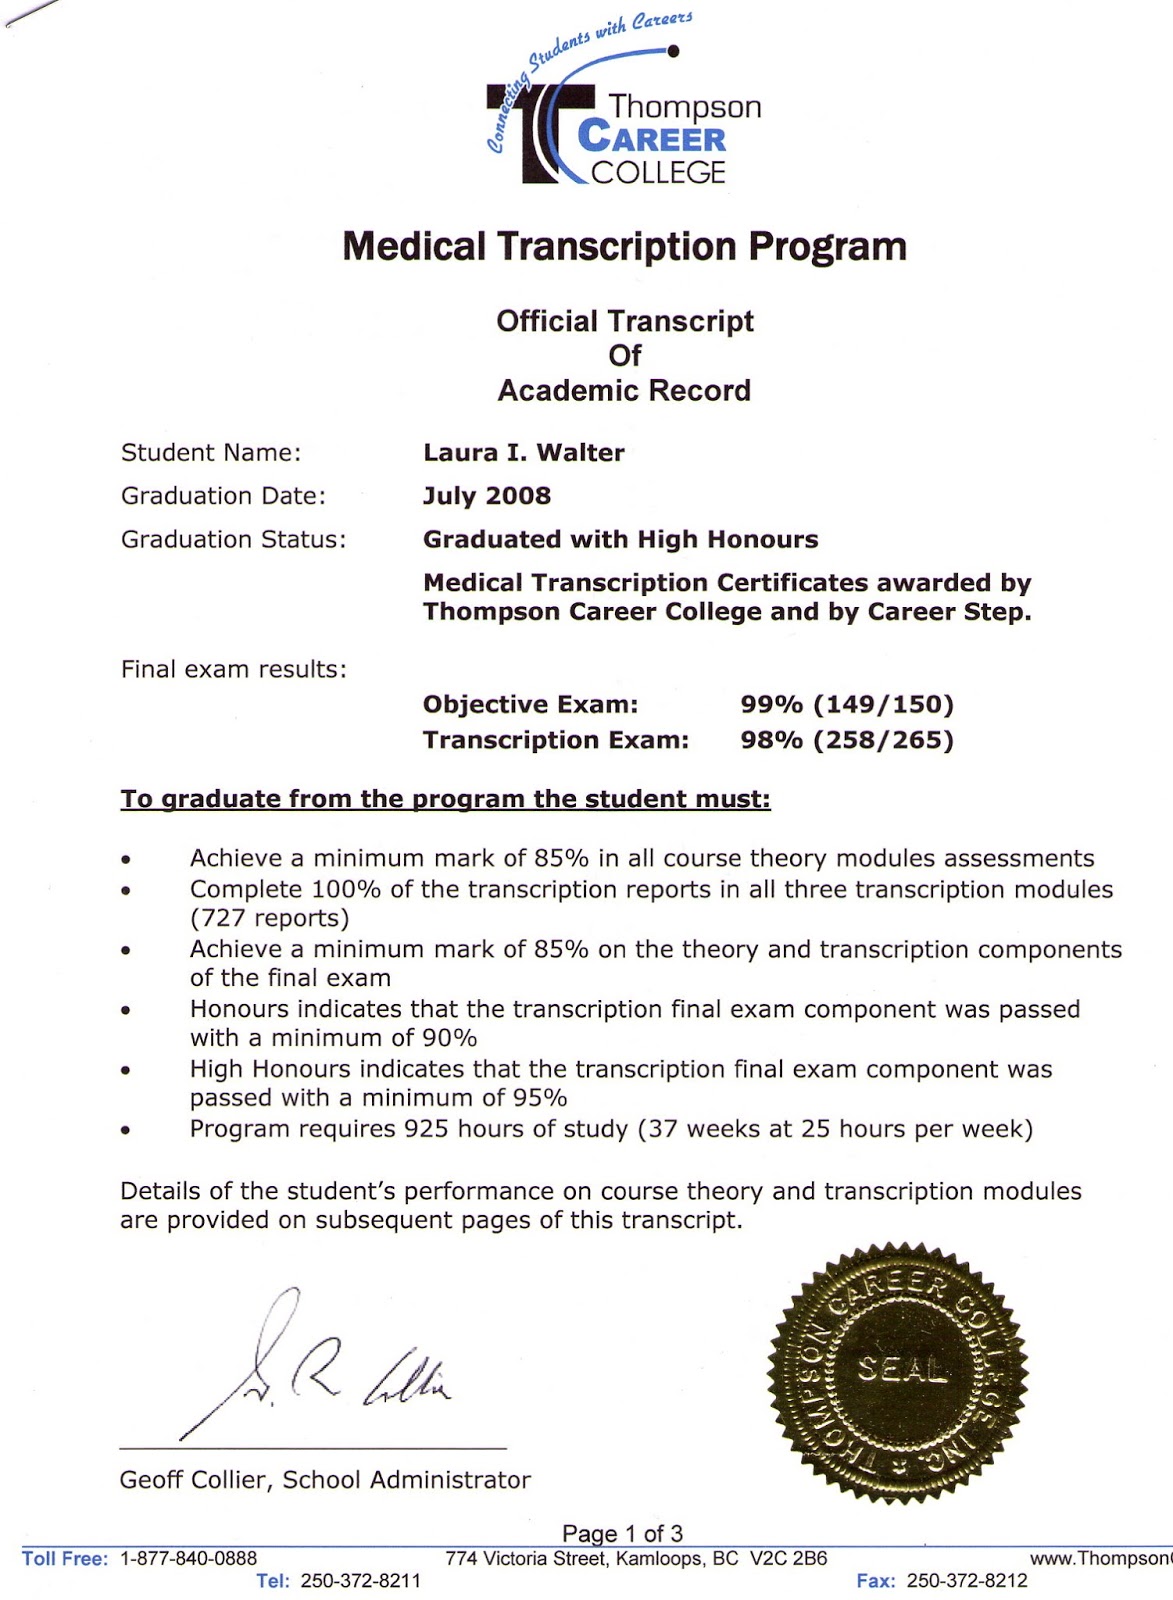 Sample resume for medical transcription